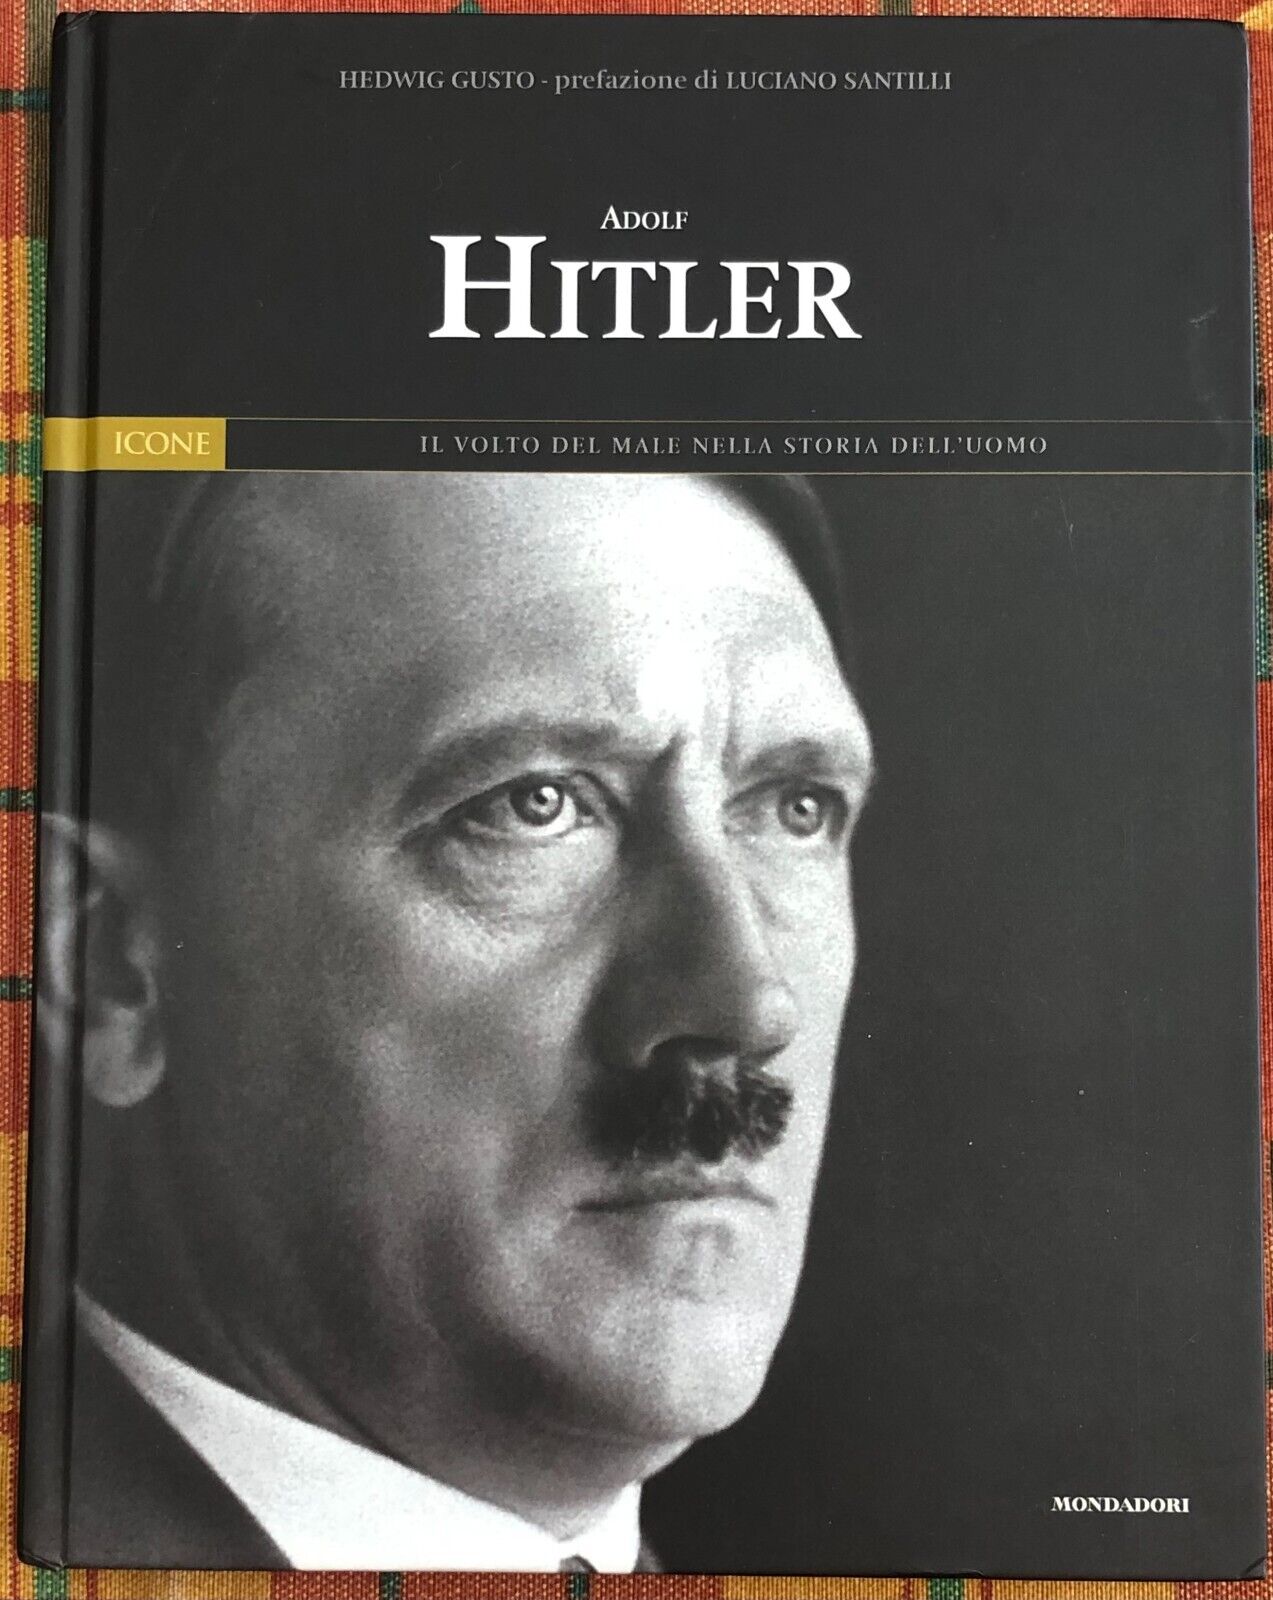 Icone del XX secolo Panorama n. 4 - Adolf Hitler di Hedwig Gusto, 2004, Monda